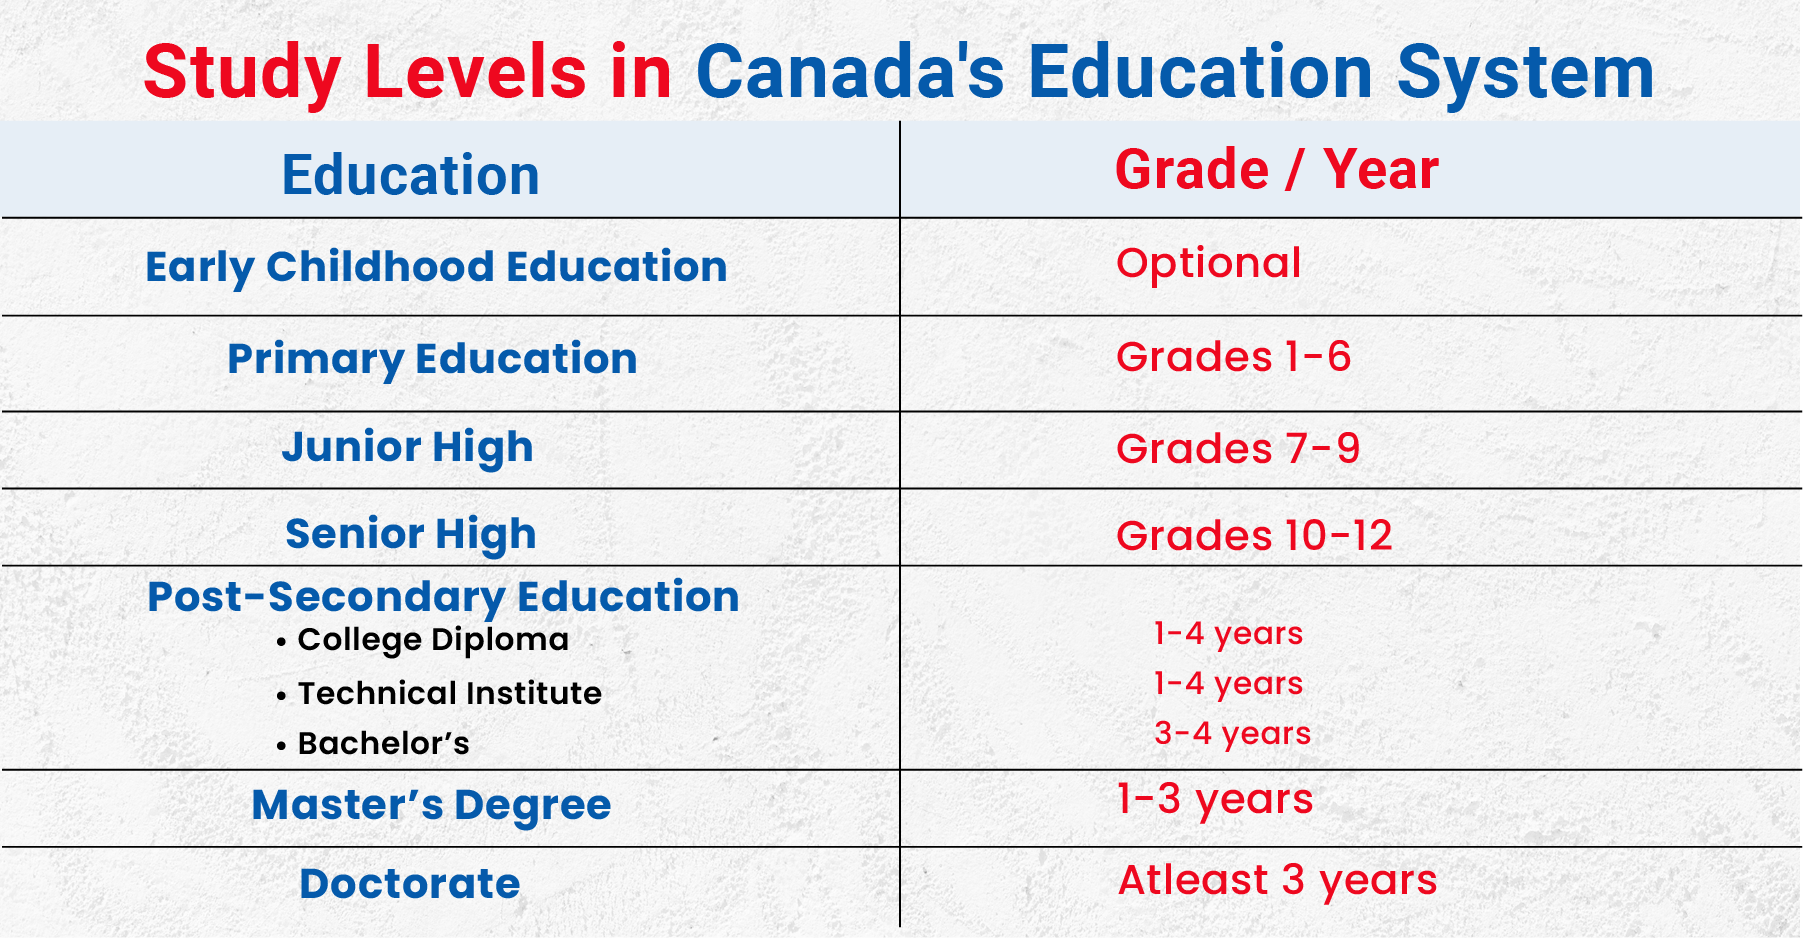  Education Levels in Canada|Gradding.com